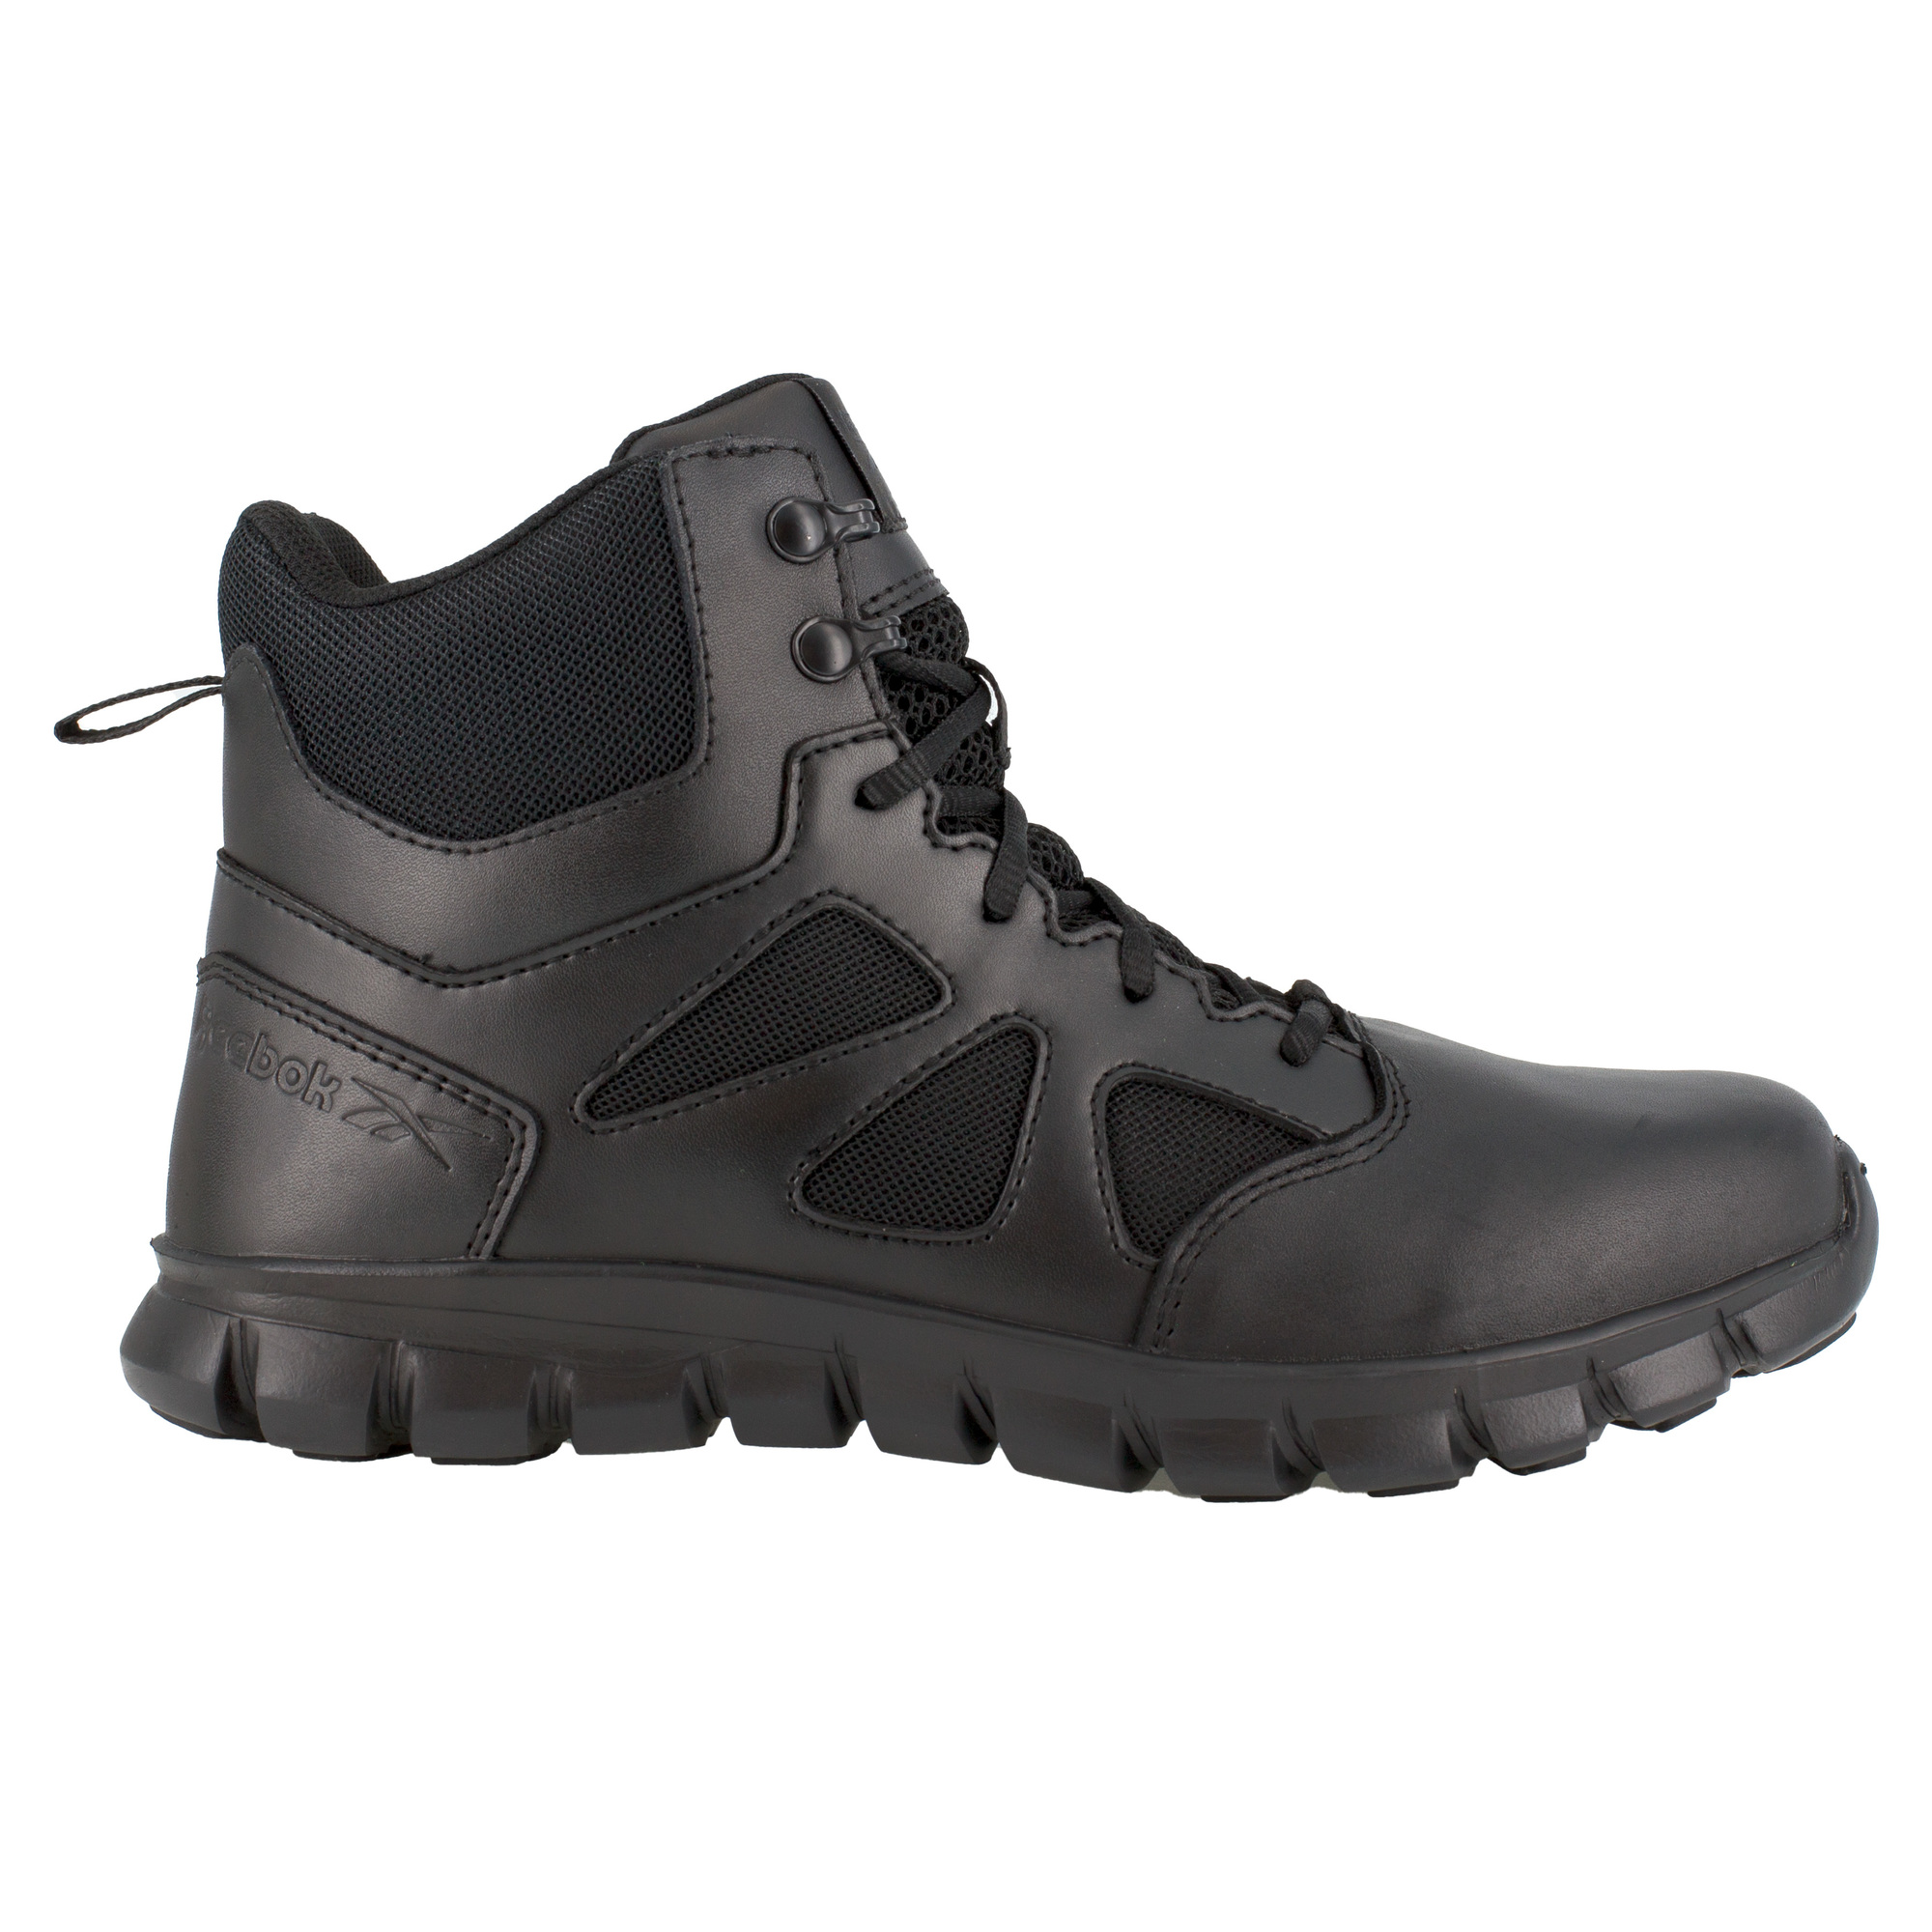 Reebok, 6Inch Tactical Boot w/Side Zipper, Size 7 1/2, Width Wide, Color Black, Model RB086